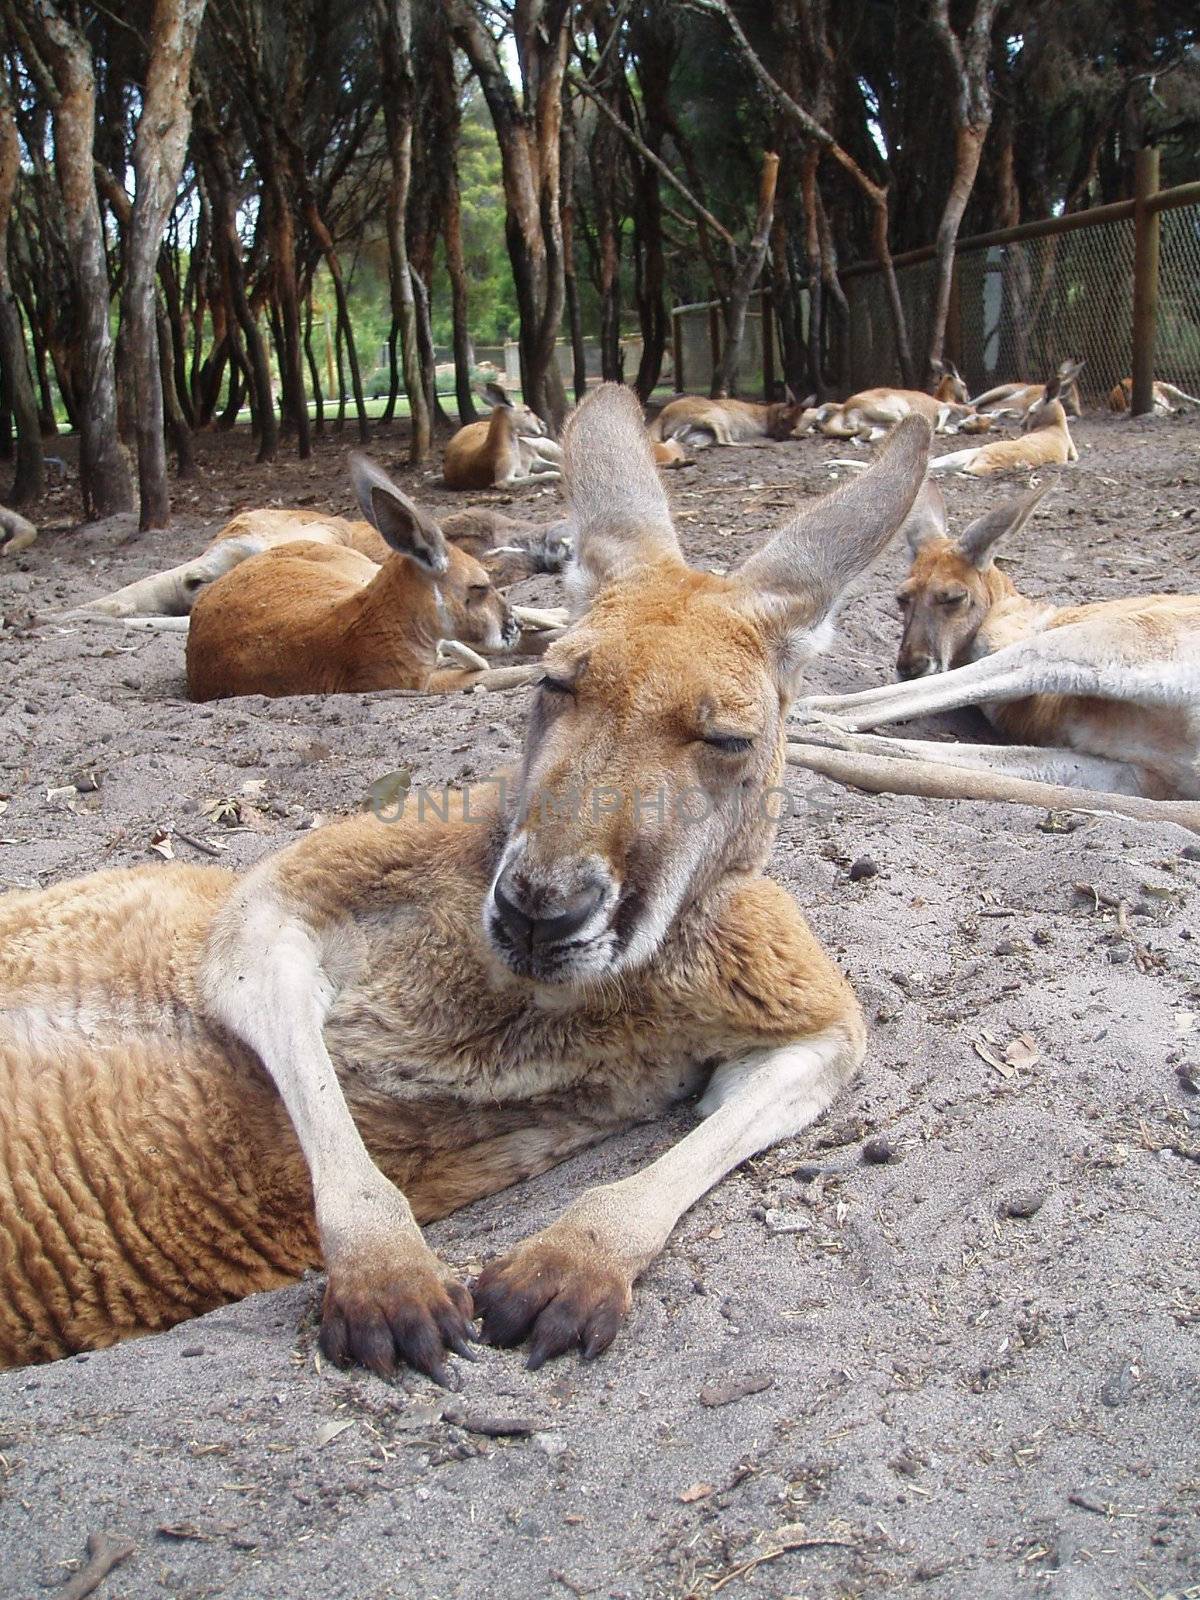 Kangaroo resting in Australia.